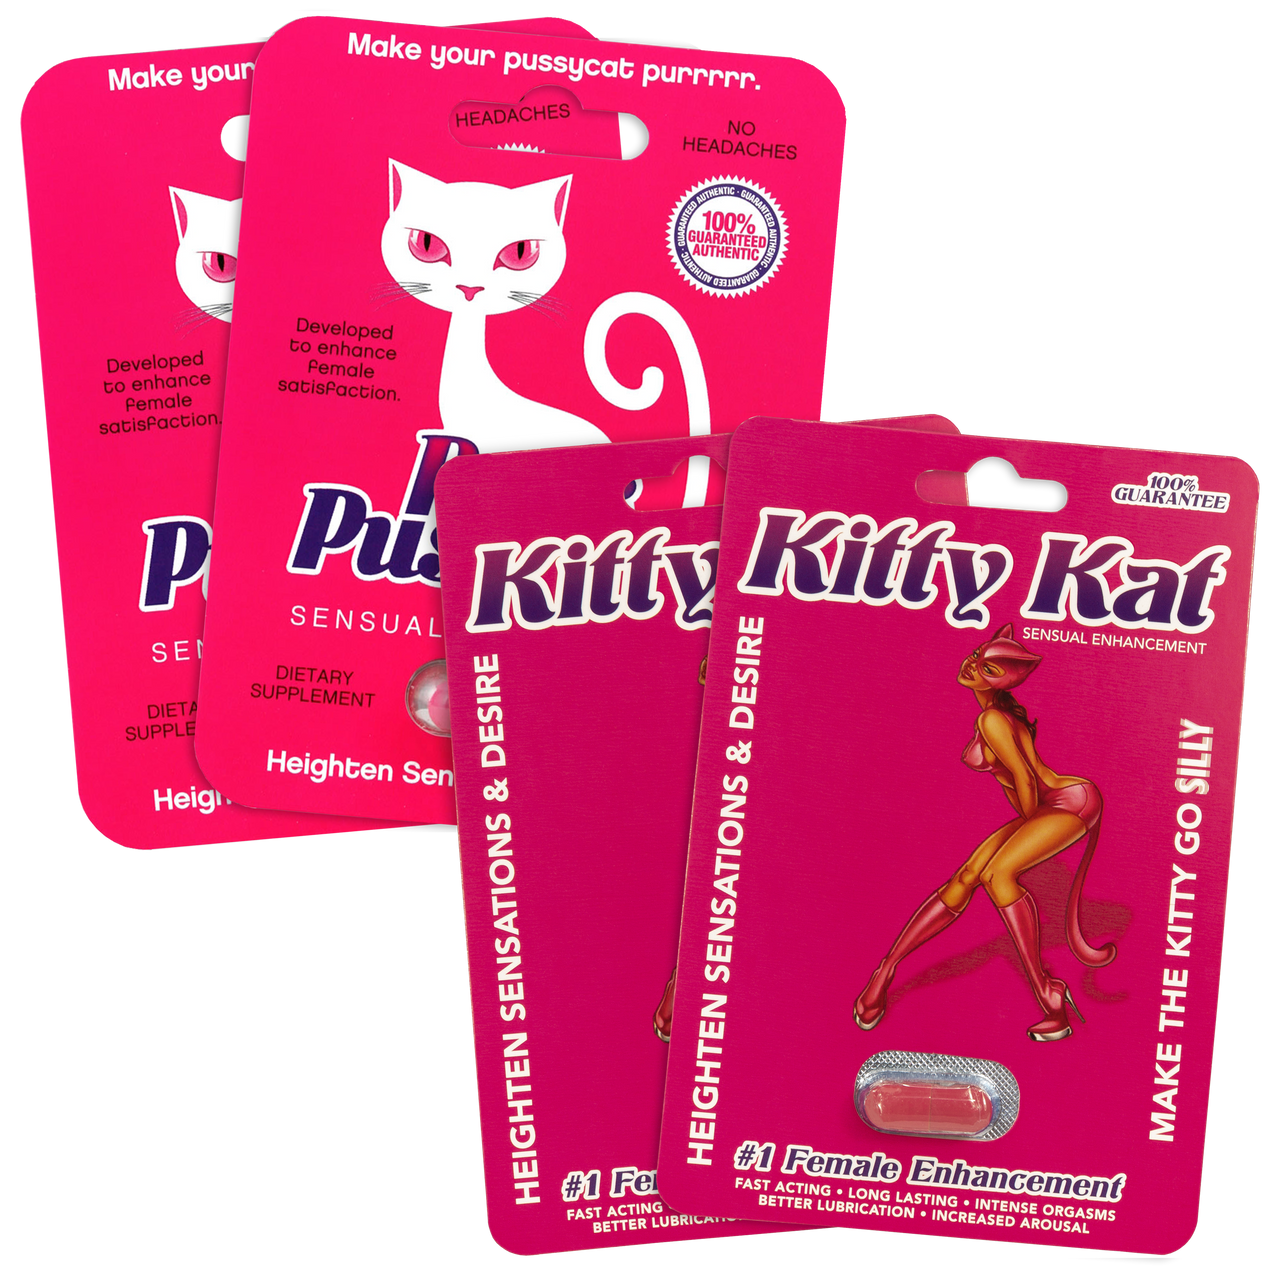 In Stock - 2 Kitty Kat Pills 2 Pink Pussycat Pills